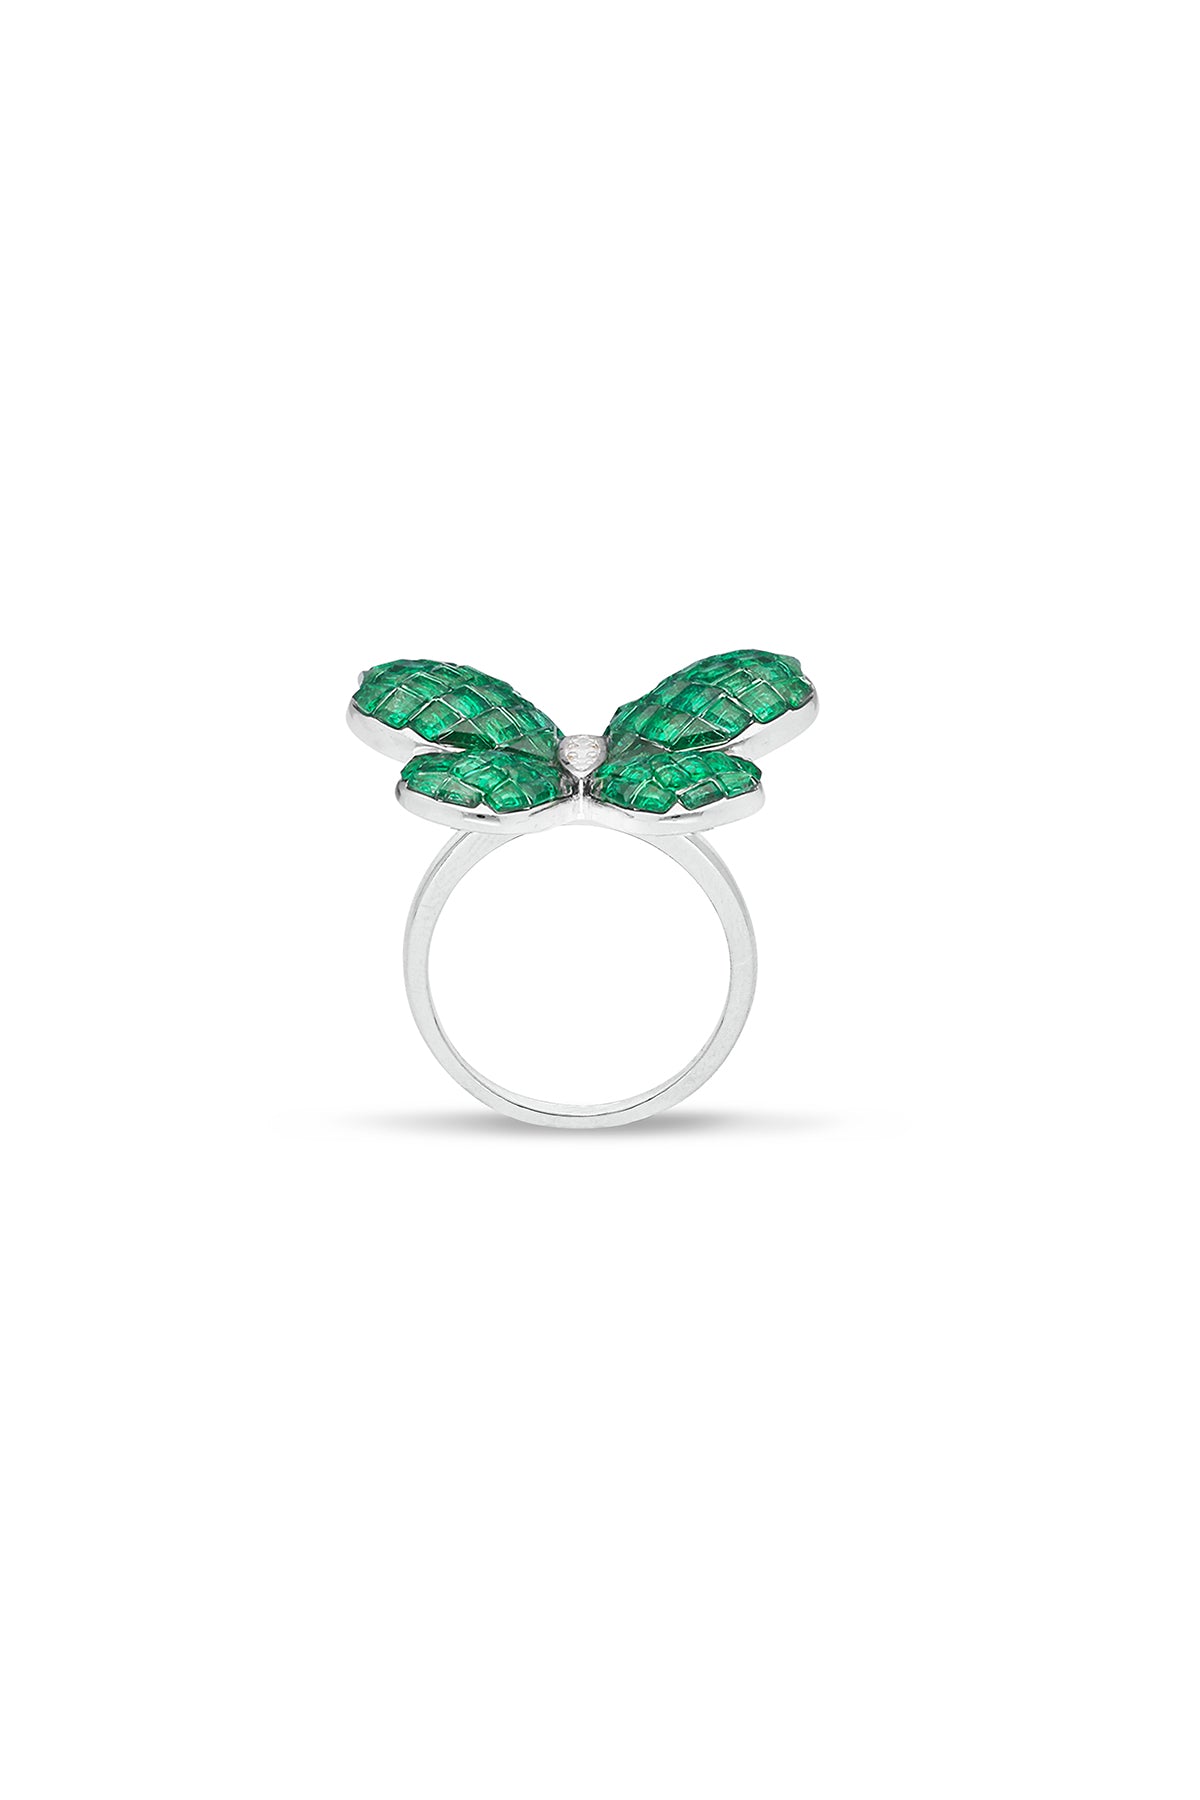 Fluttering Wings Emerald Green Ring